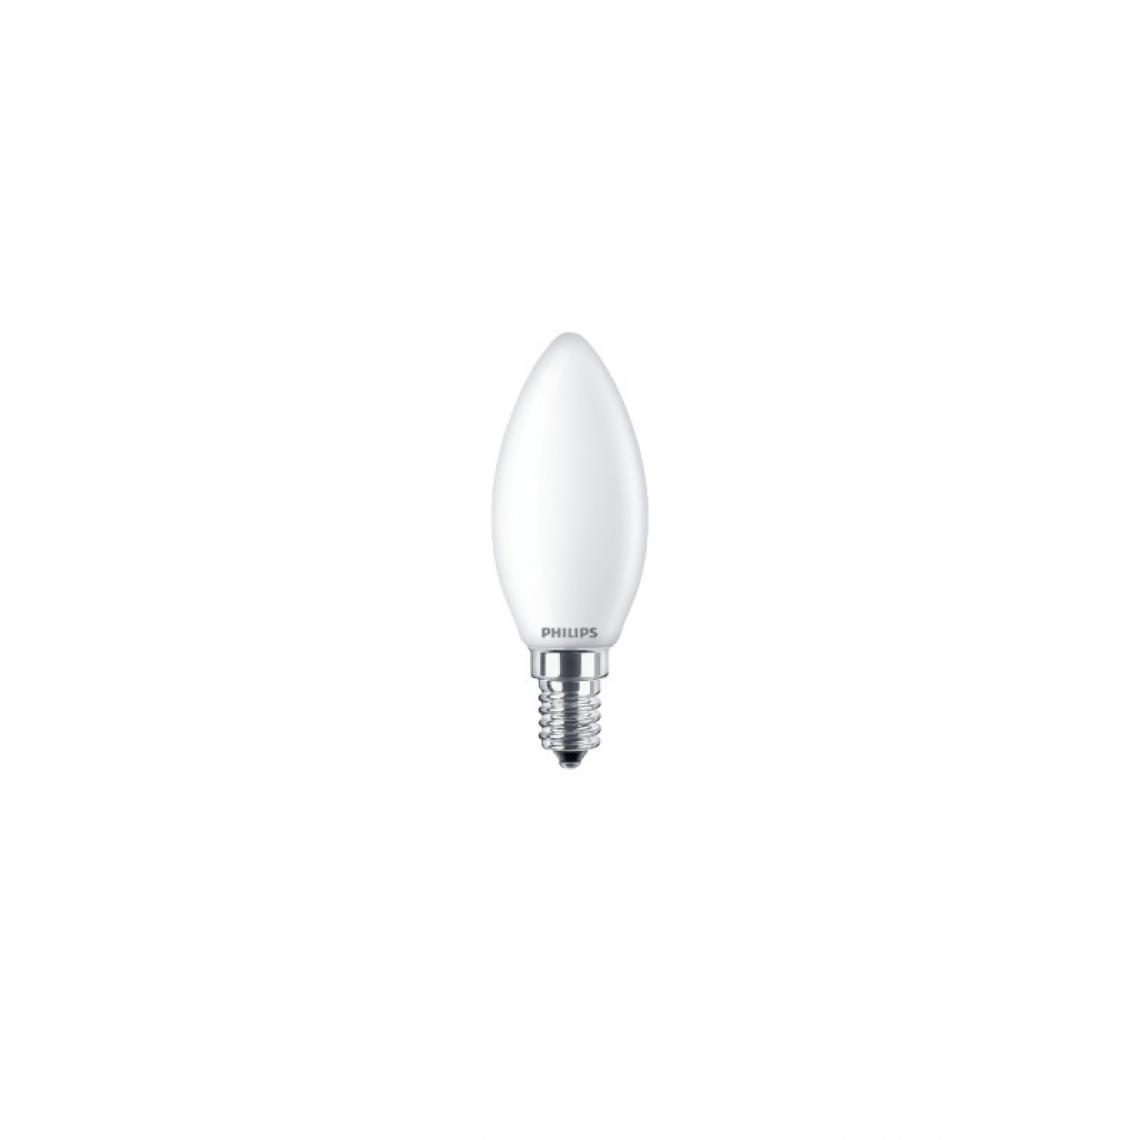 Philips - Ampoule LED bougie PHILIPS - EyeComfort - 4,3W - 470 lumens - 6500K - E14 - 93008 - Ampoules LED